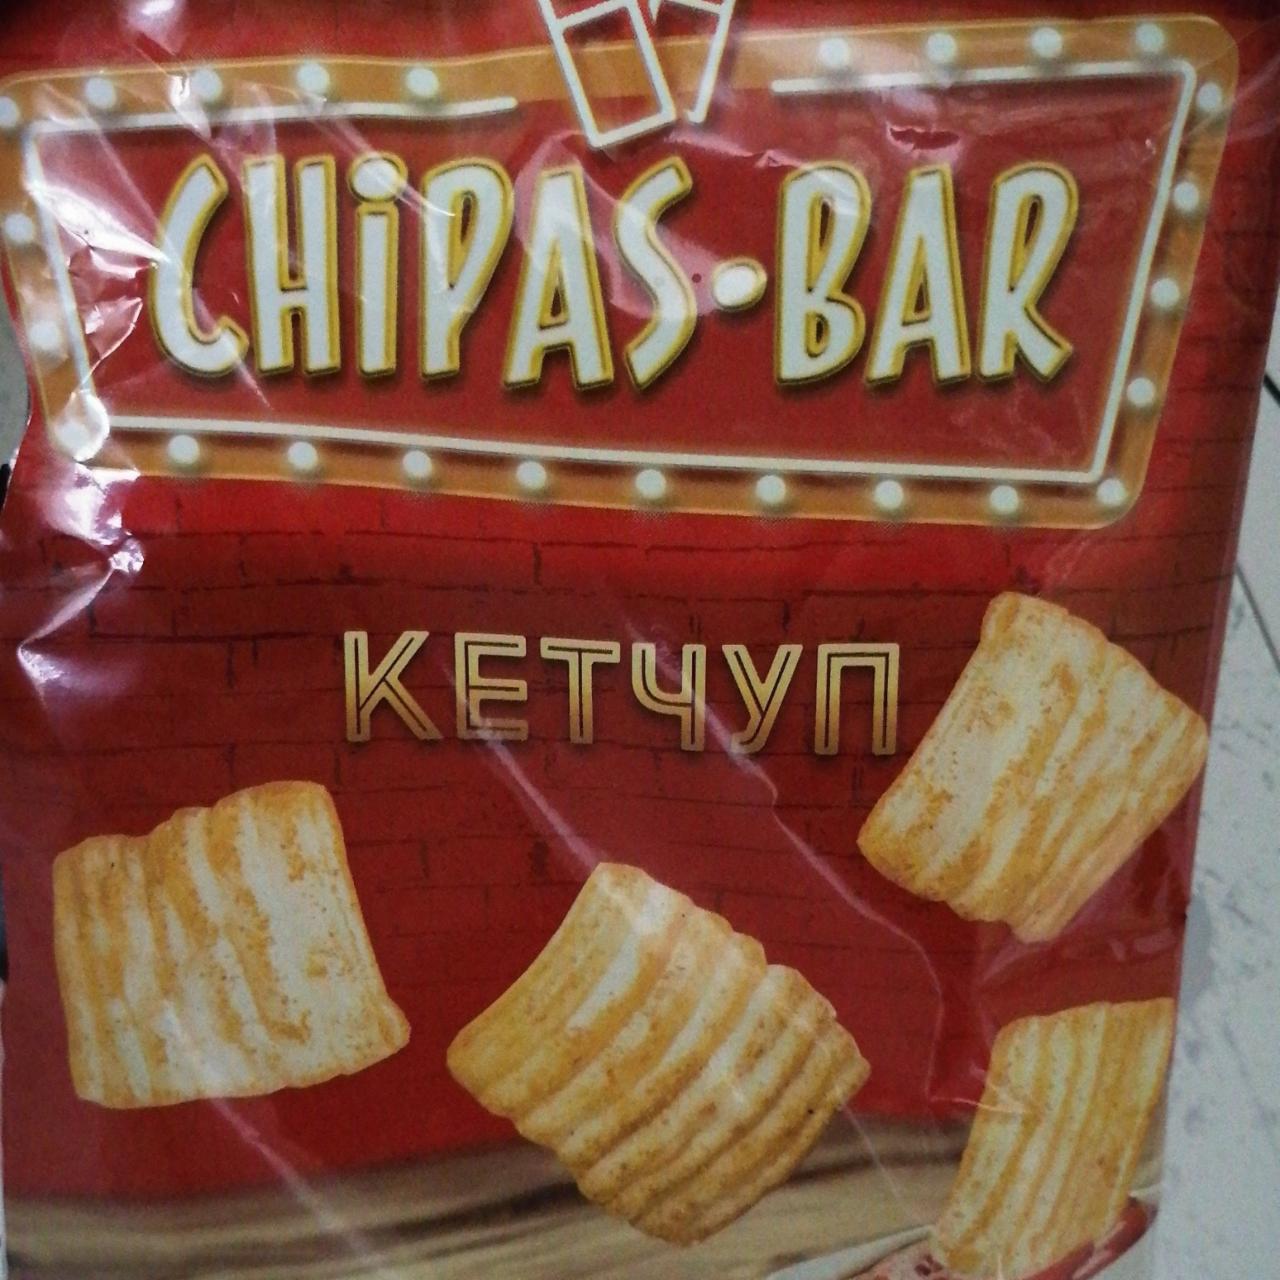 Фото - Чипсы со вкусом кетчупа Chipas Bar